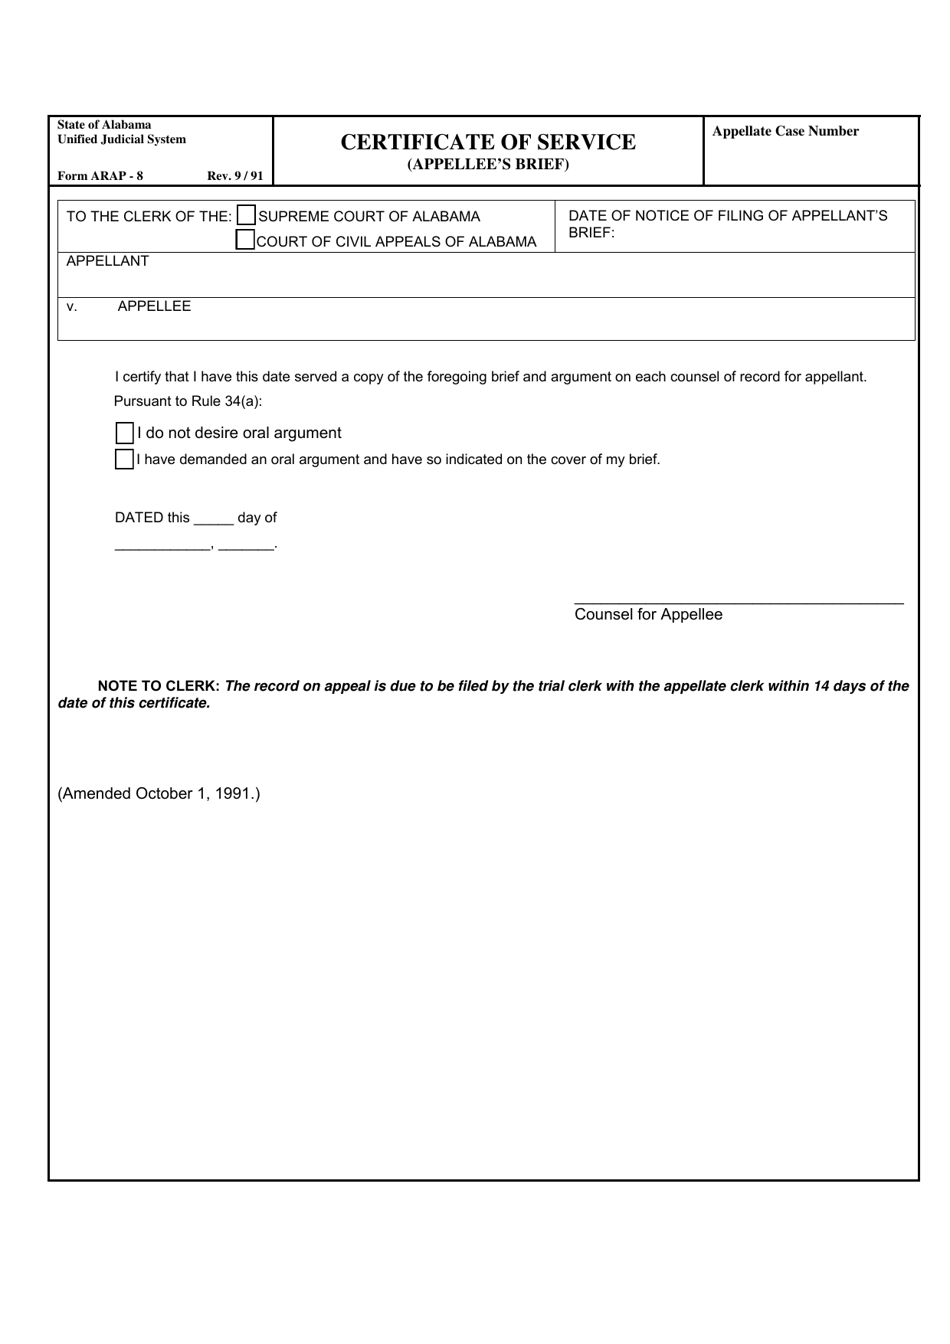 Form ARAP-8 Certificate of Service (Appellees Brief) - Alabama, Page 1